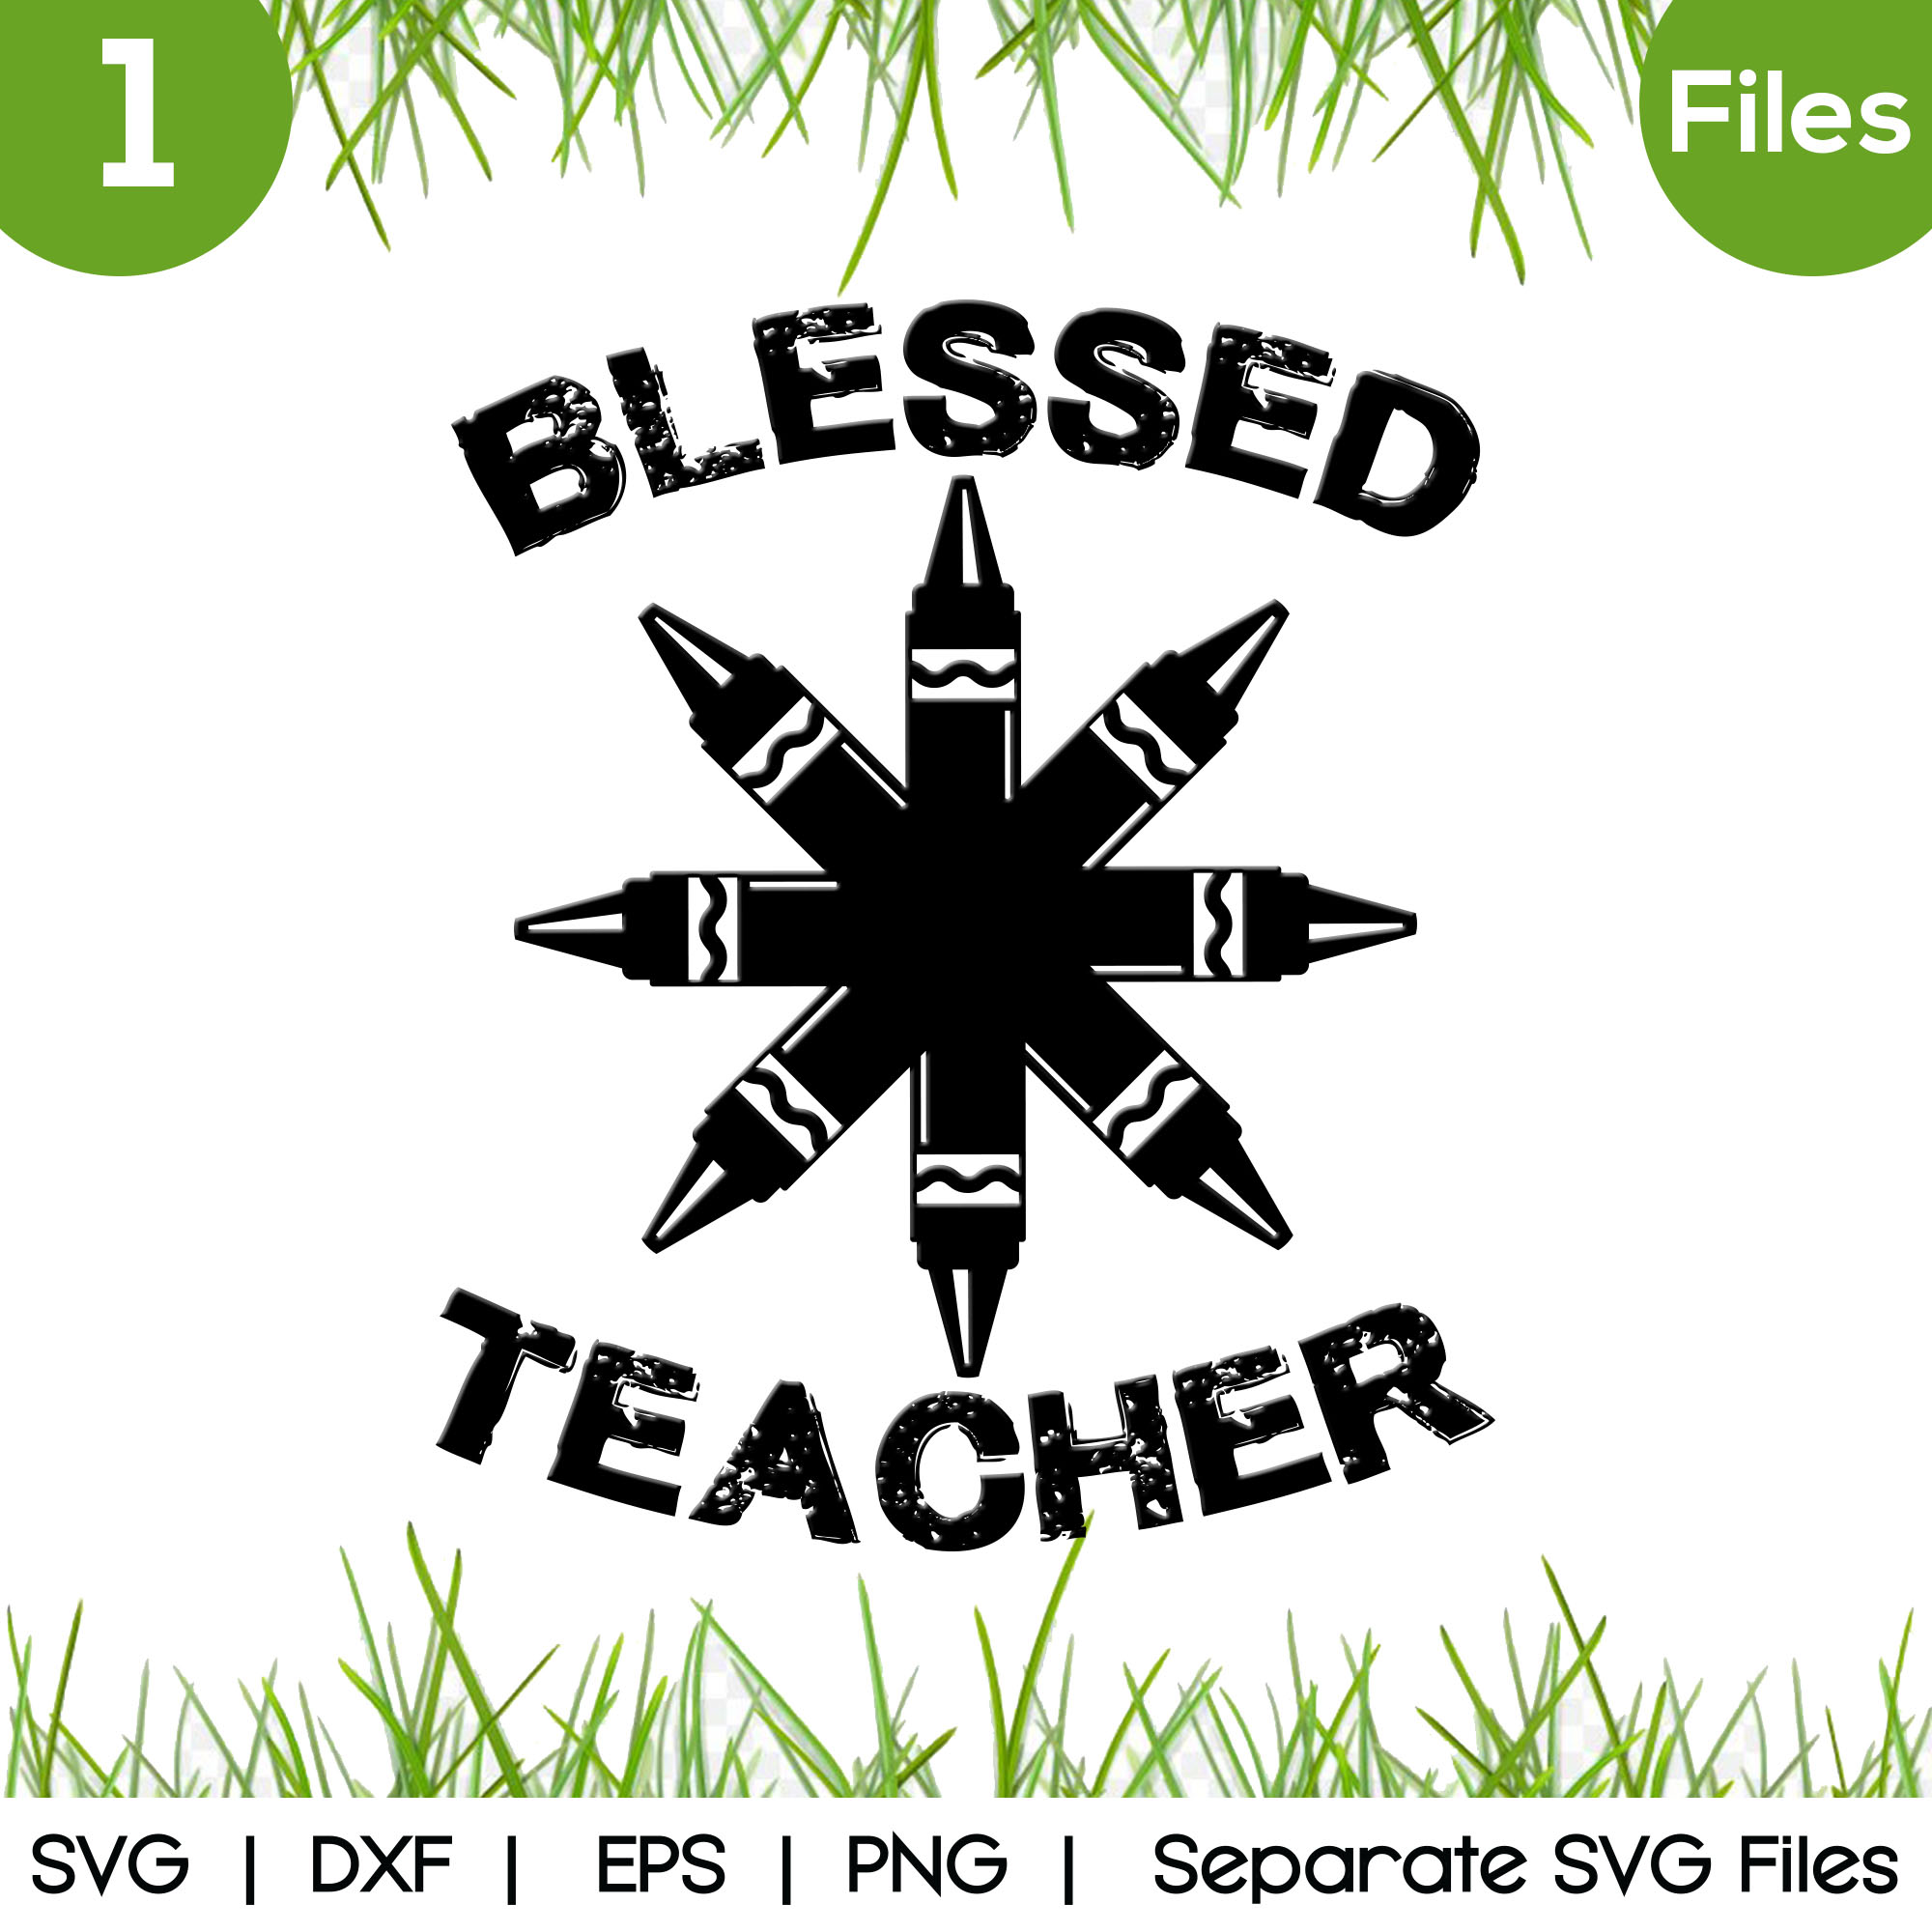 Free Free Teacher Svg Cut Files 192 SVG PNG EPS DXF File